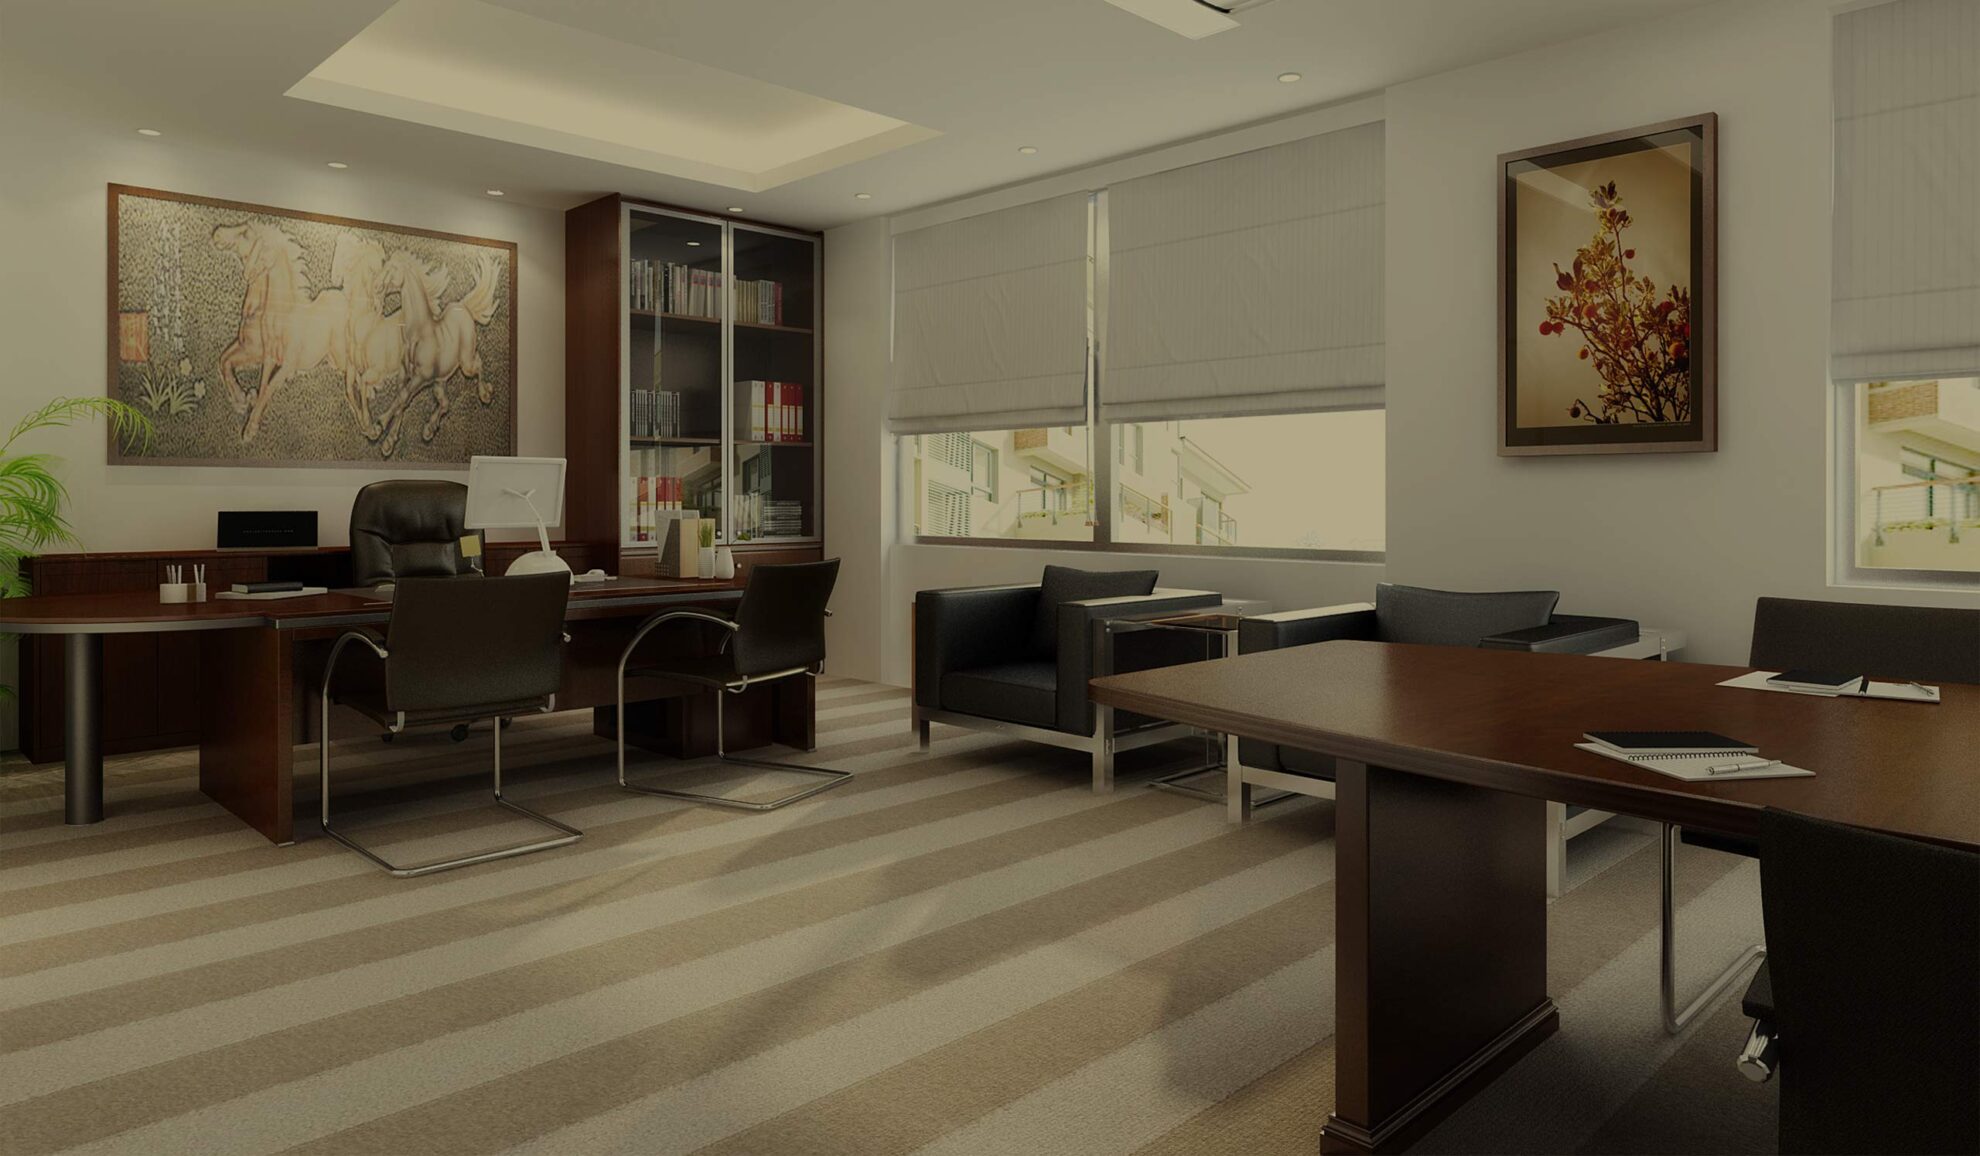 office interiors remodeled with new hardwood flooring and lighting fixtures rockaway nj